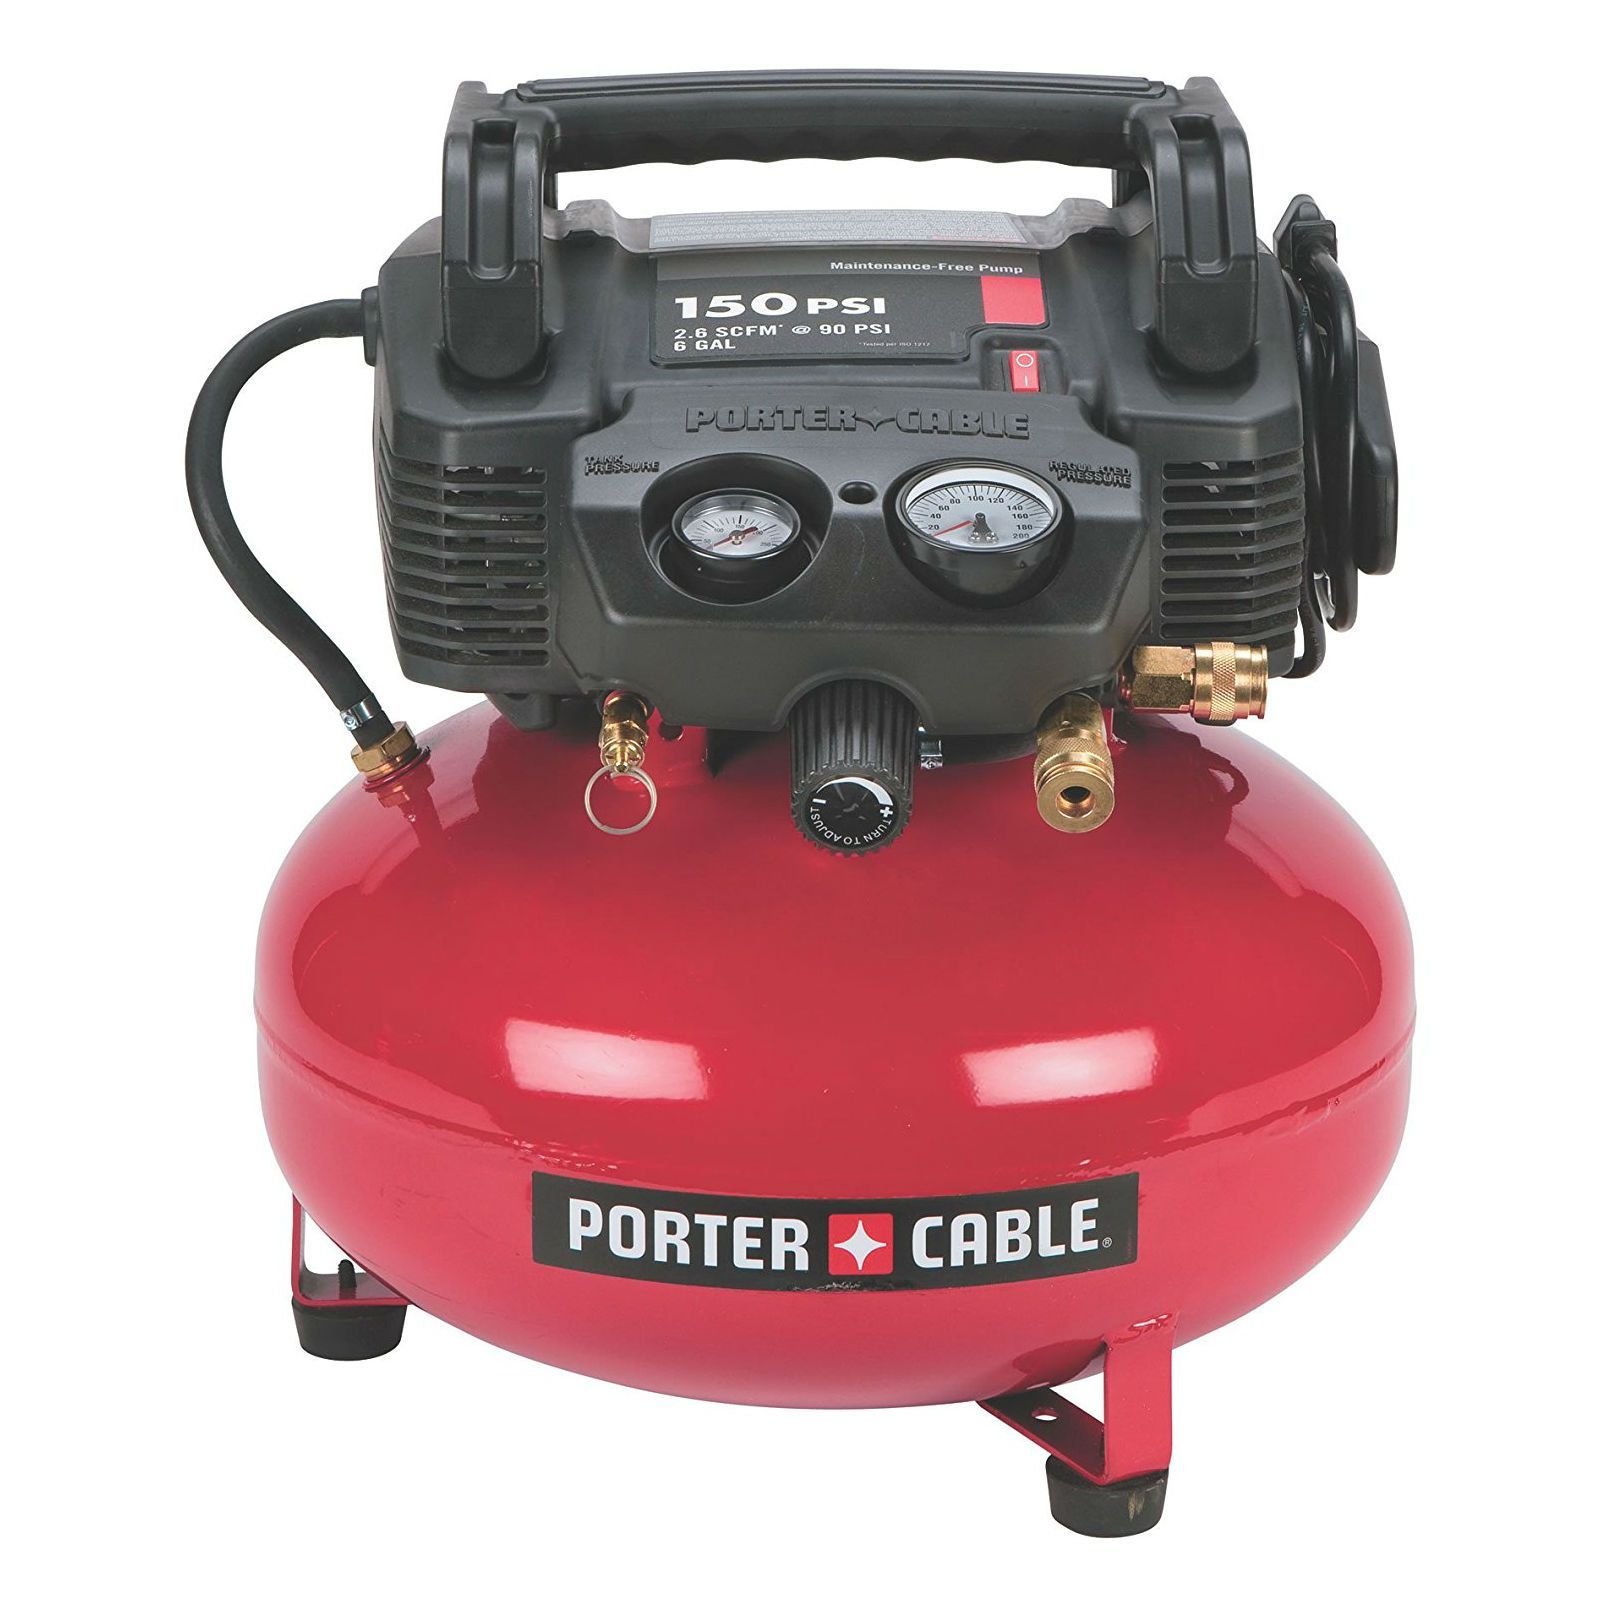 Porter-Cable C2002-WK Pancake Compressor